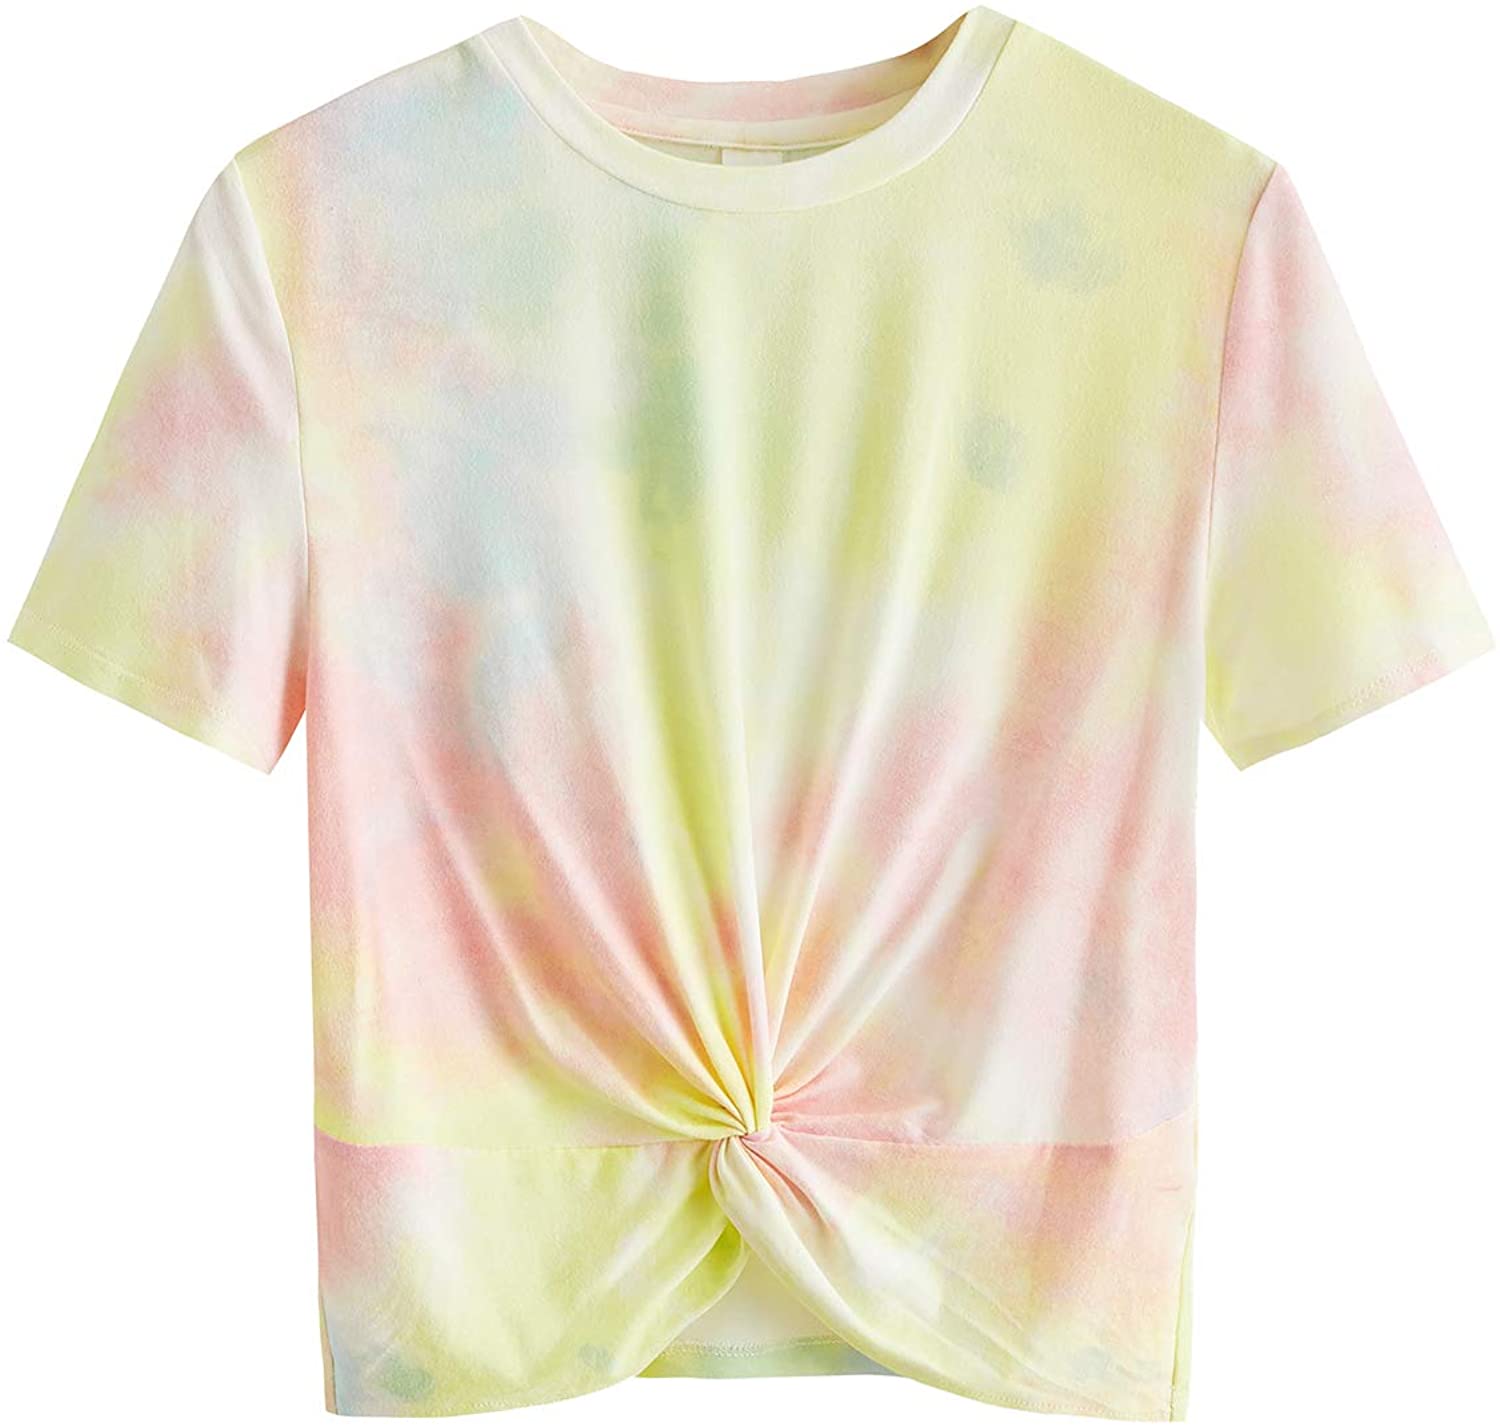 MakeMeChic Women's Summer Crop Top Solid Short Sleeve Twist Front Tee  T-Shirt